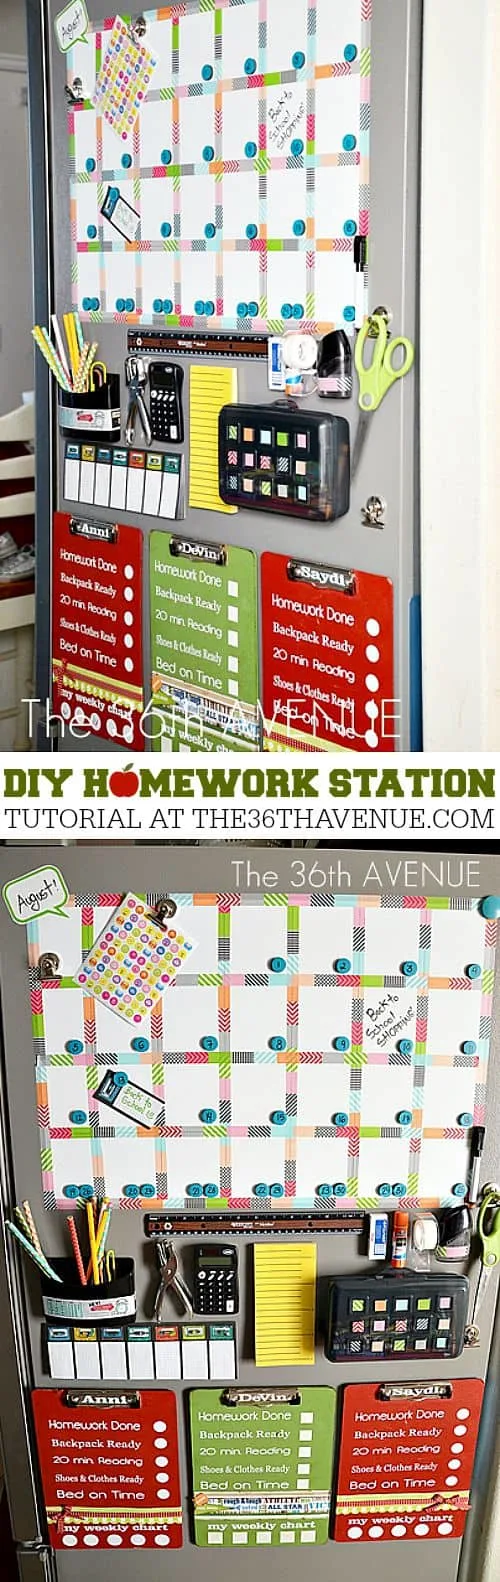 diy-homework-station